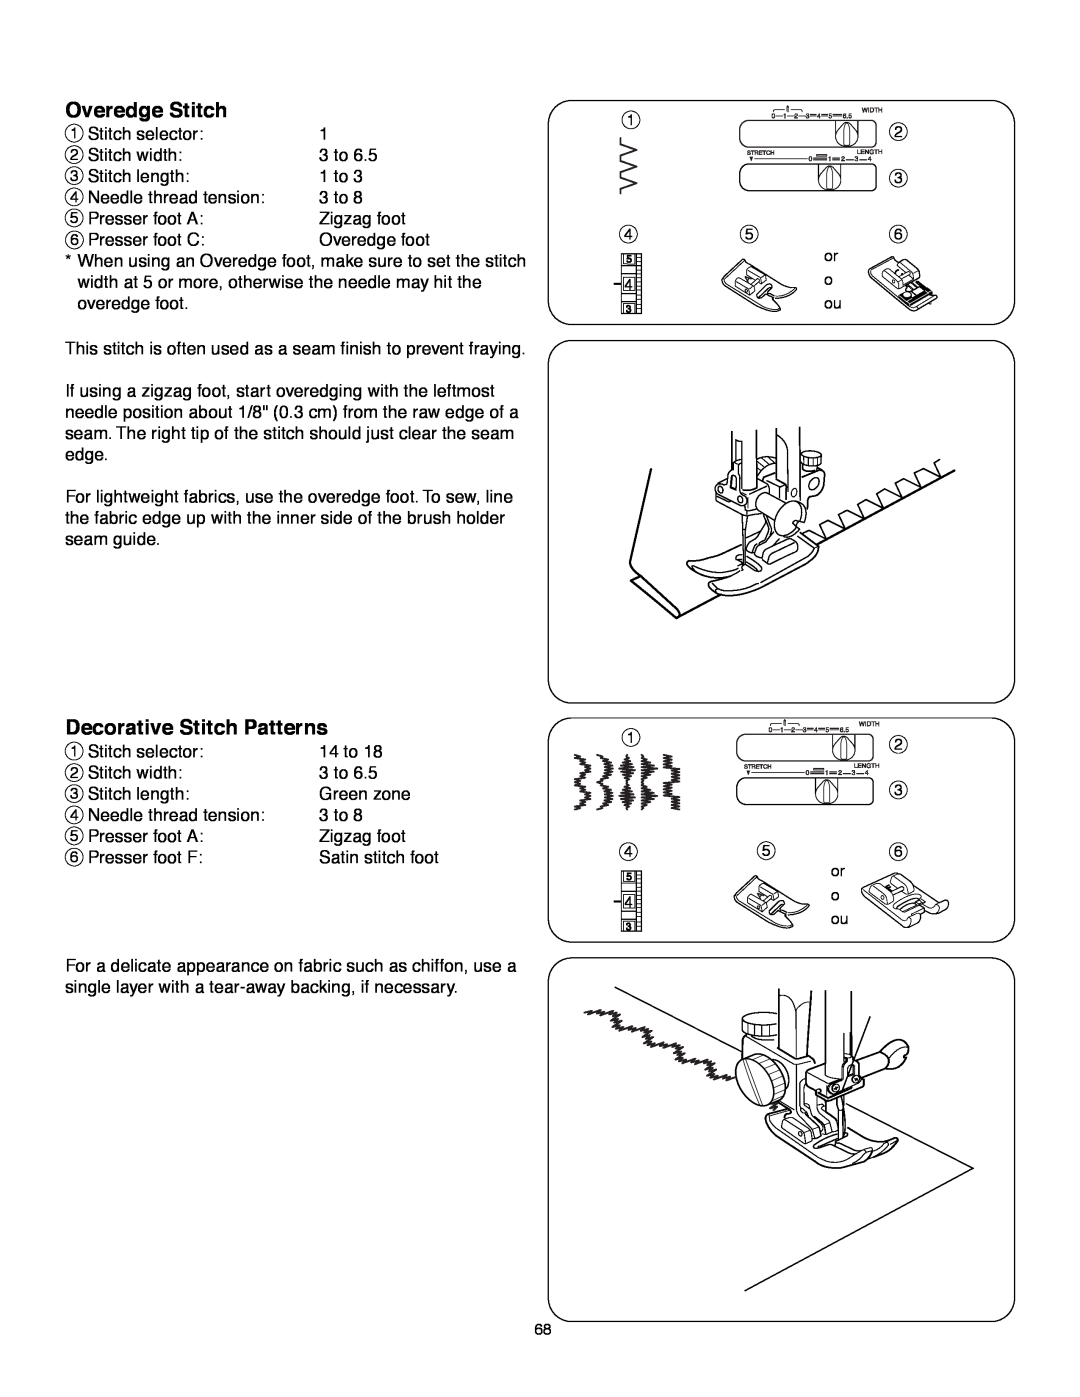 Janome MS-5027 instruction manual Overedge Stitch, Decorative Stitch Patterns 